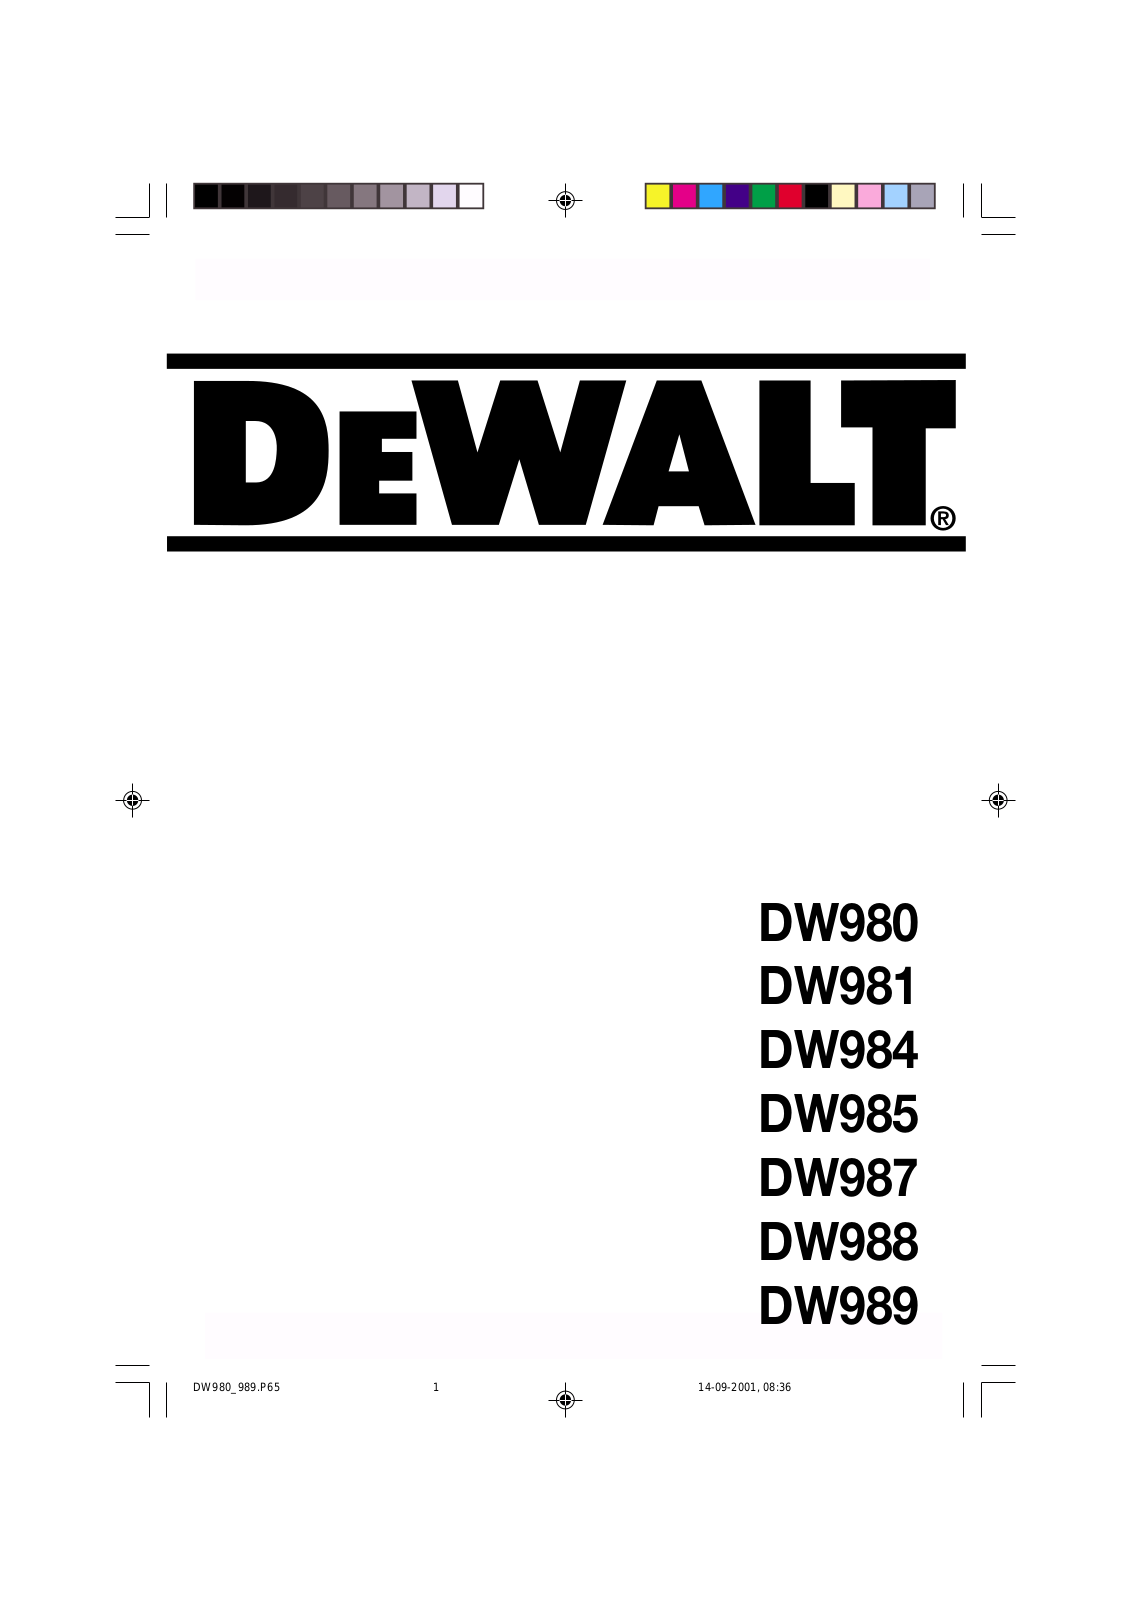 DeWalt DW985, DW984, DW980, DW987, DW989 User Manual